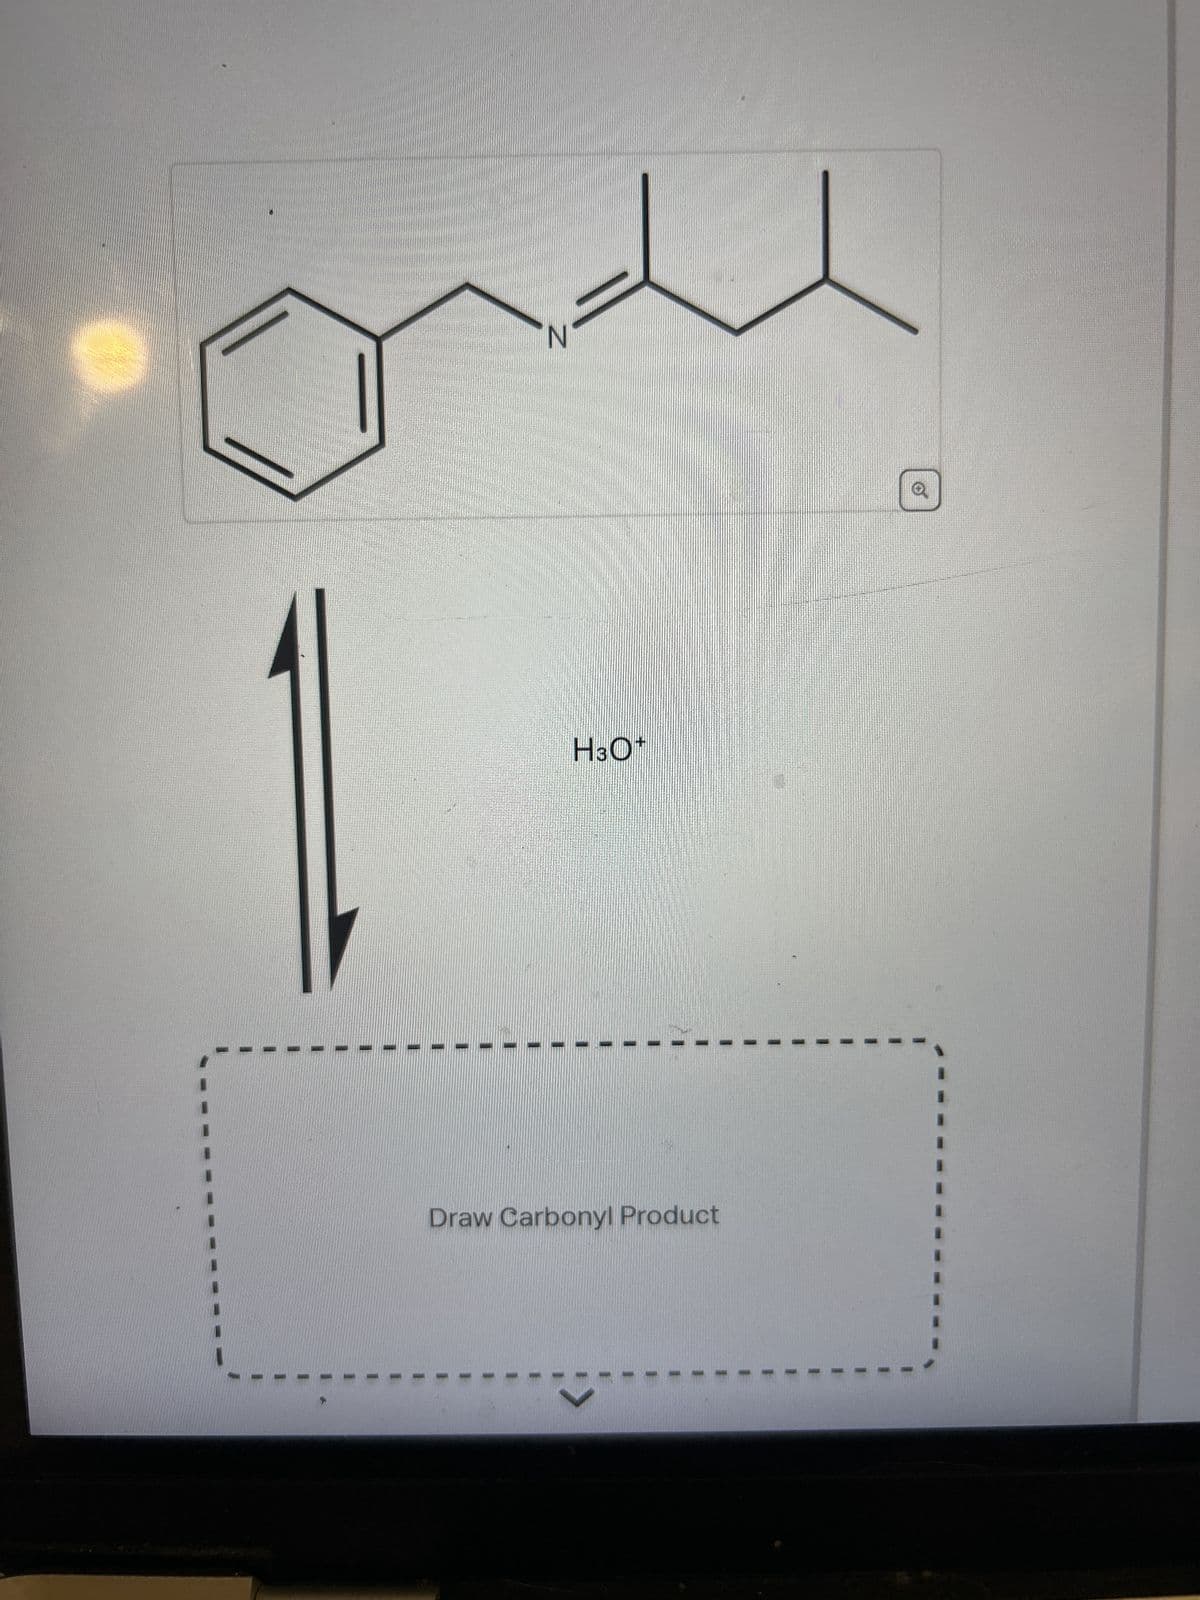 1
Z
H3O*
Draw Carbonyl Product
V
I
I